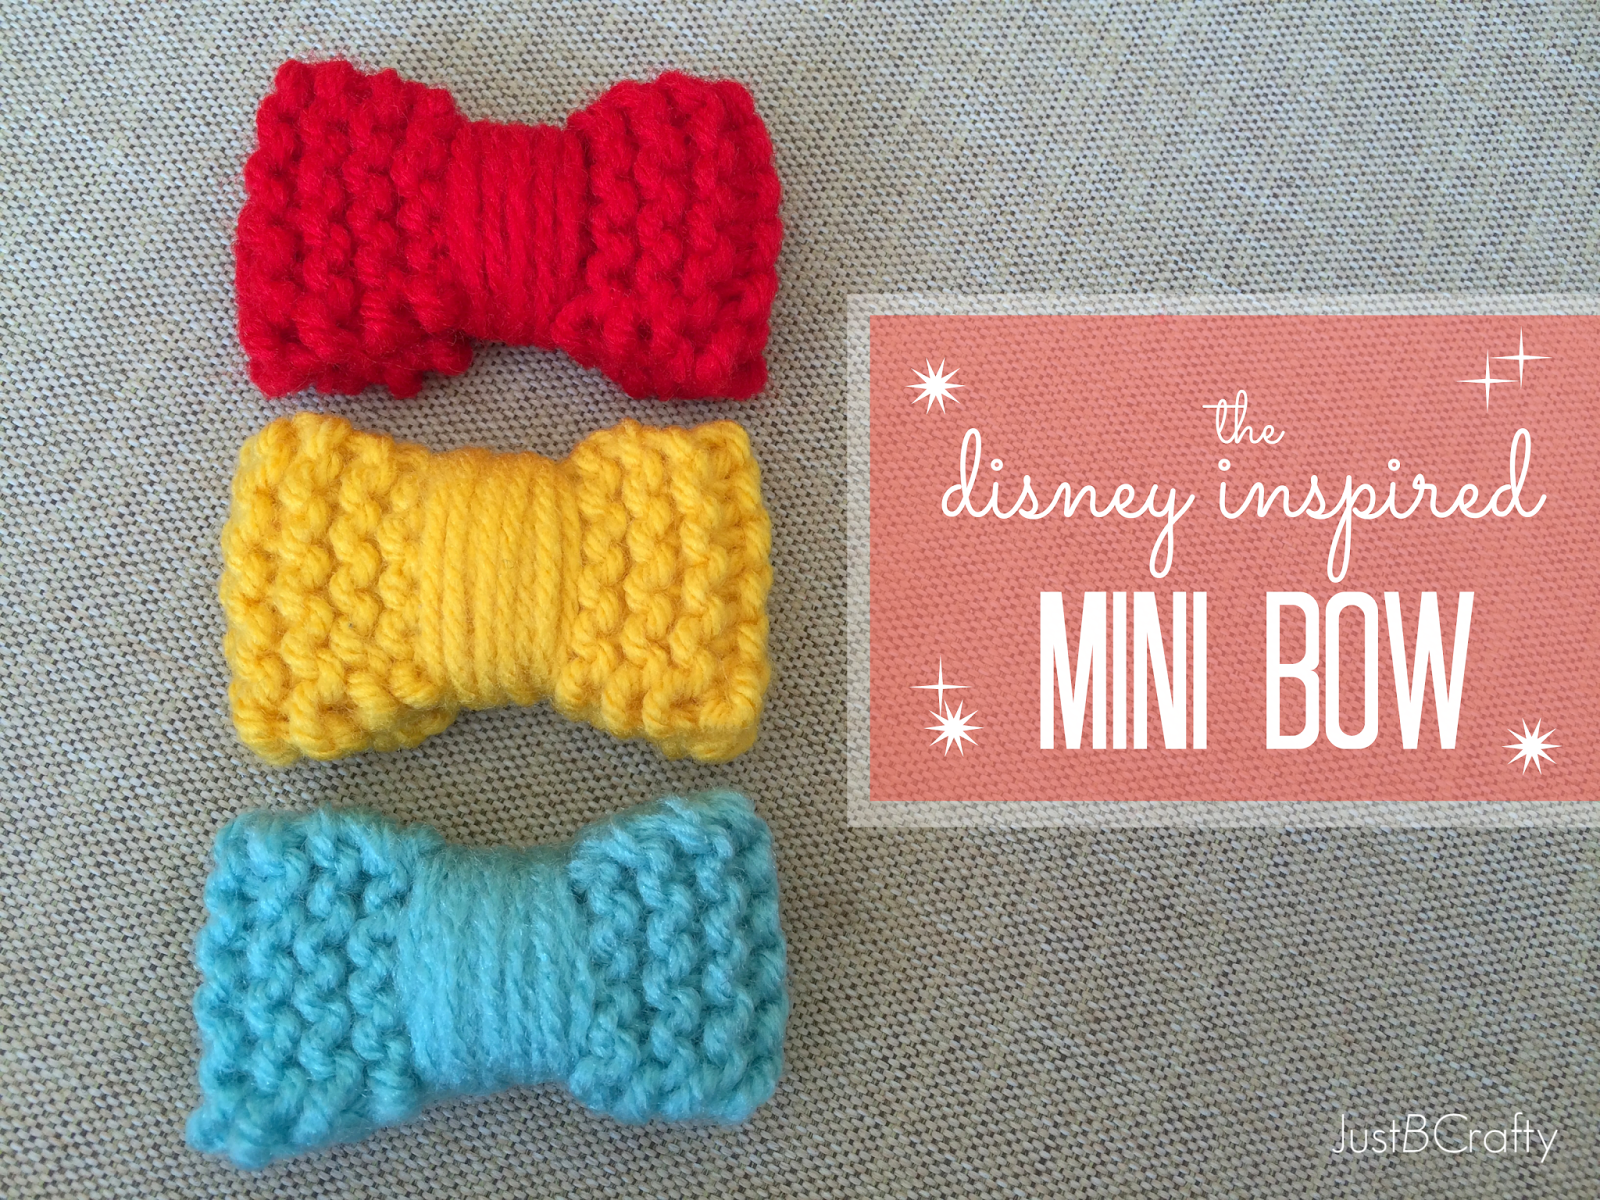 The Disney Inspired Knit Mini Bow